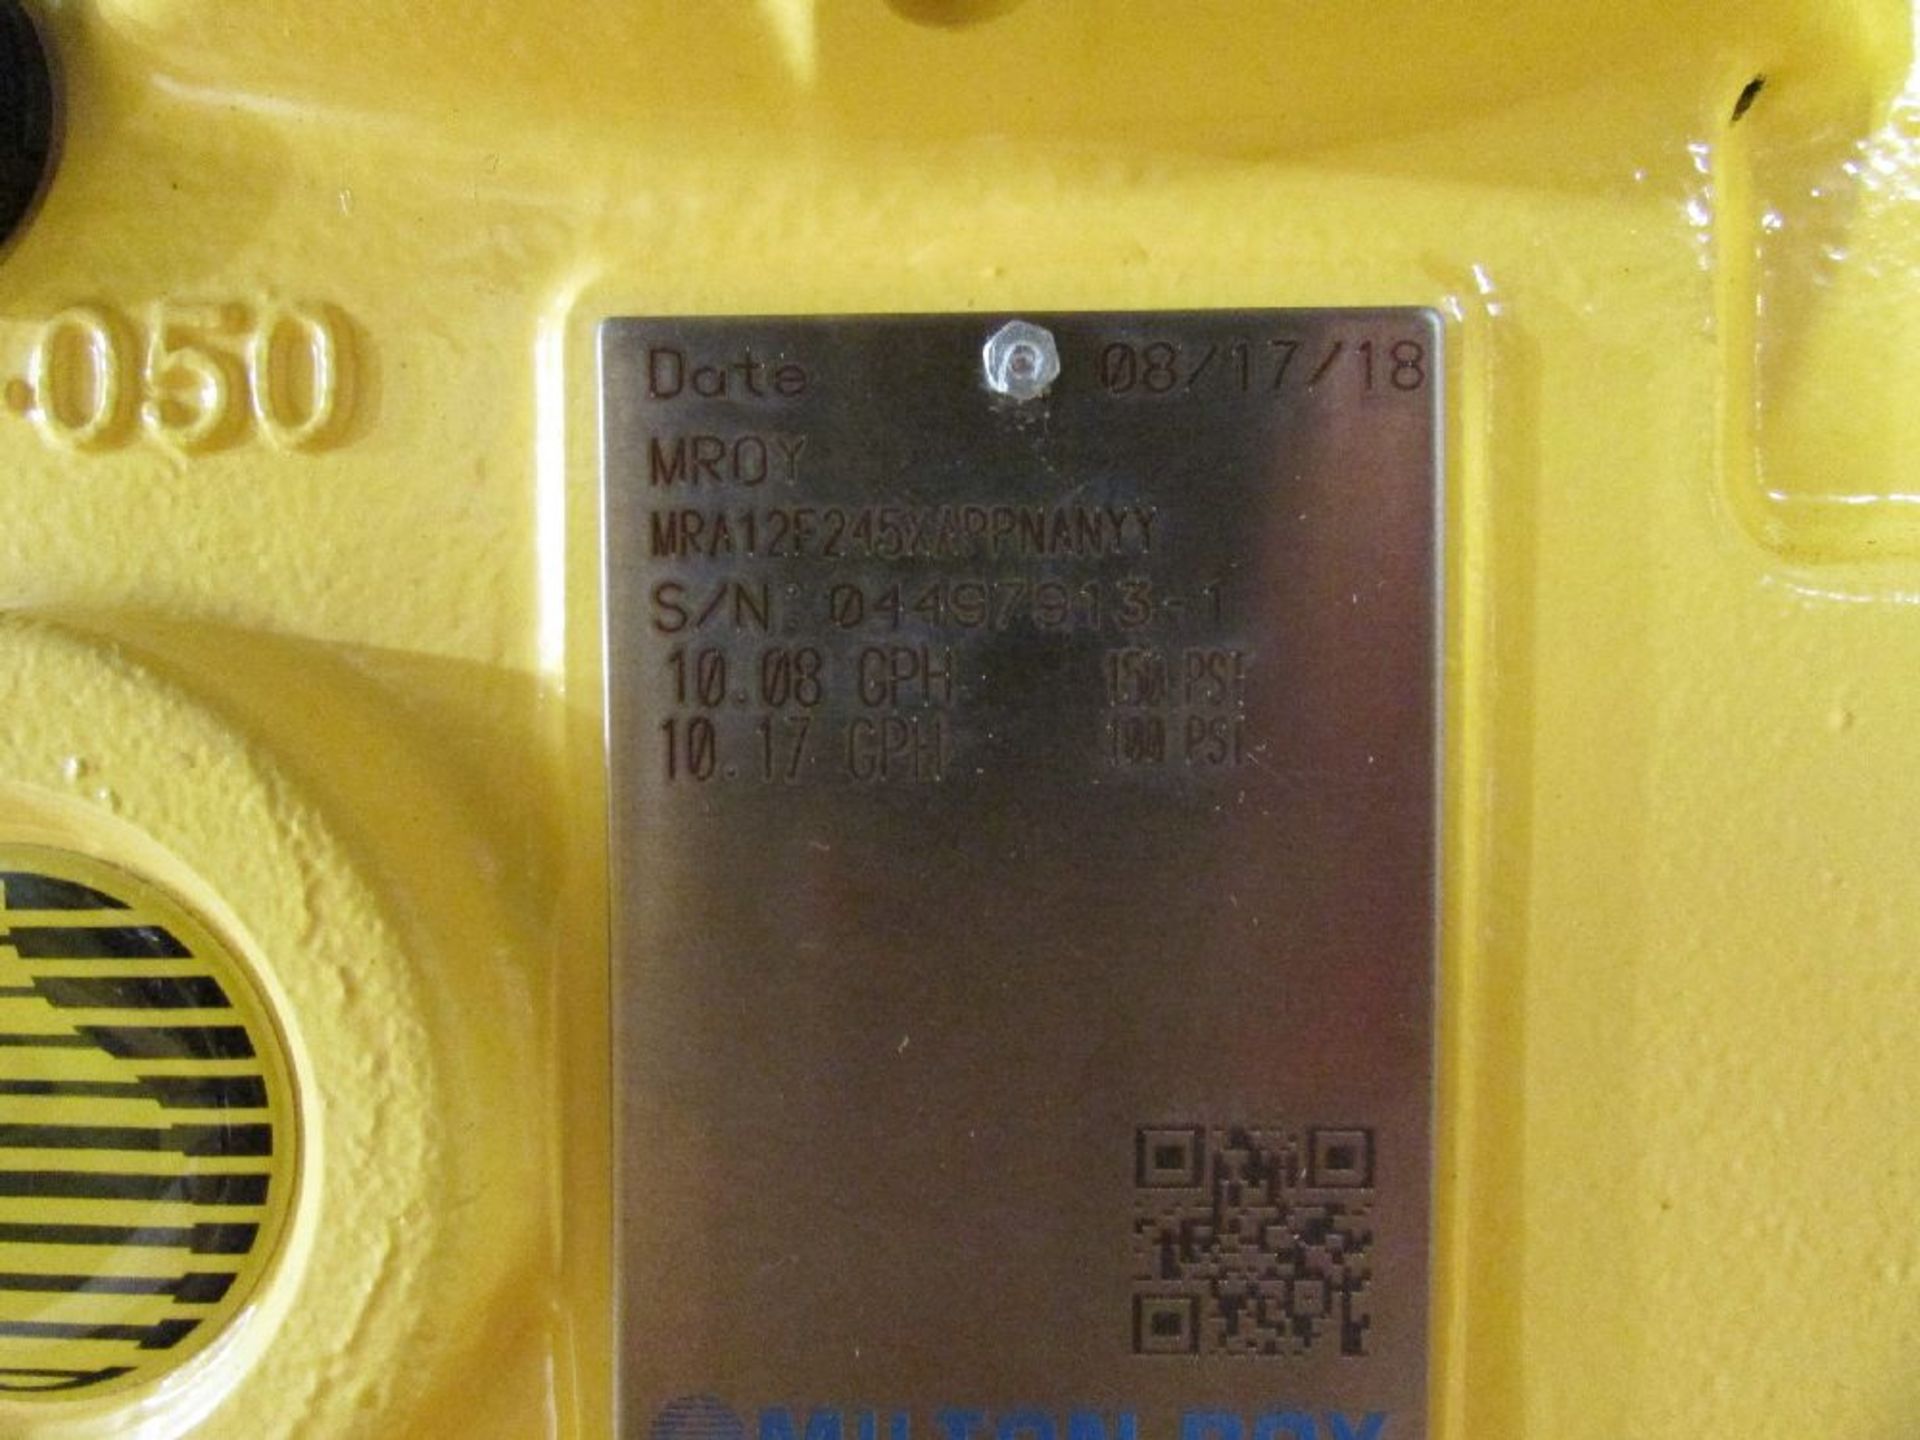 Milton Roy Model MRA12F245XAPPNANYY 1/3 HP Metering Pump - Image 4 of 4